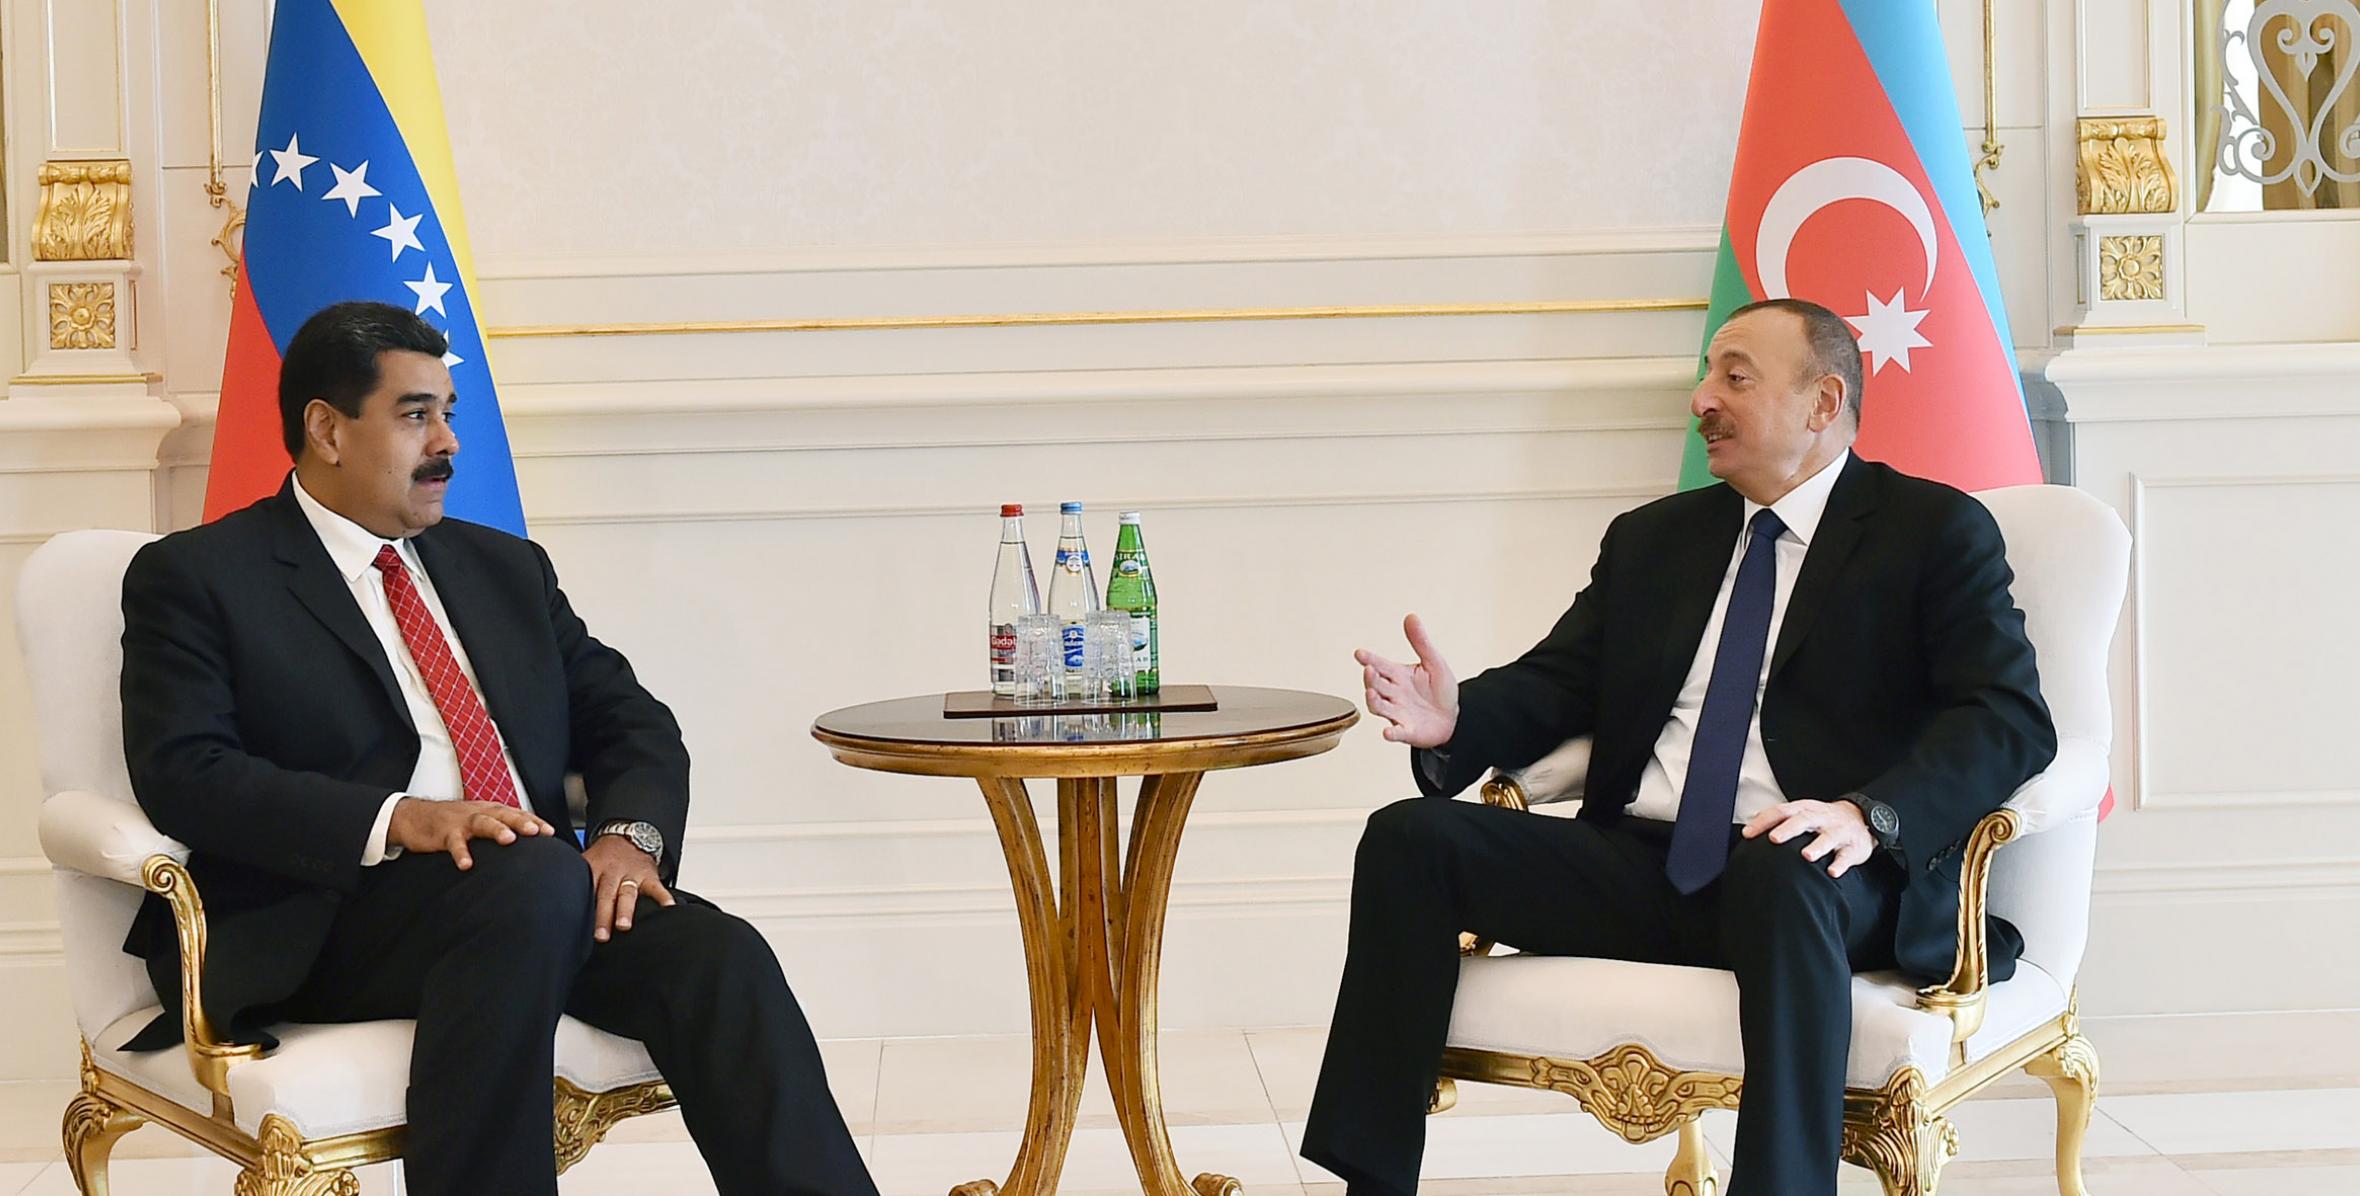 Ilham Aliyev met with Venezuelan President Nicolas Maduro in limited format